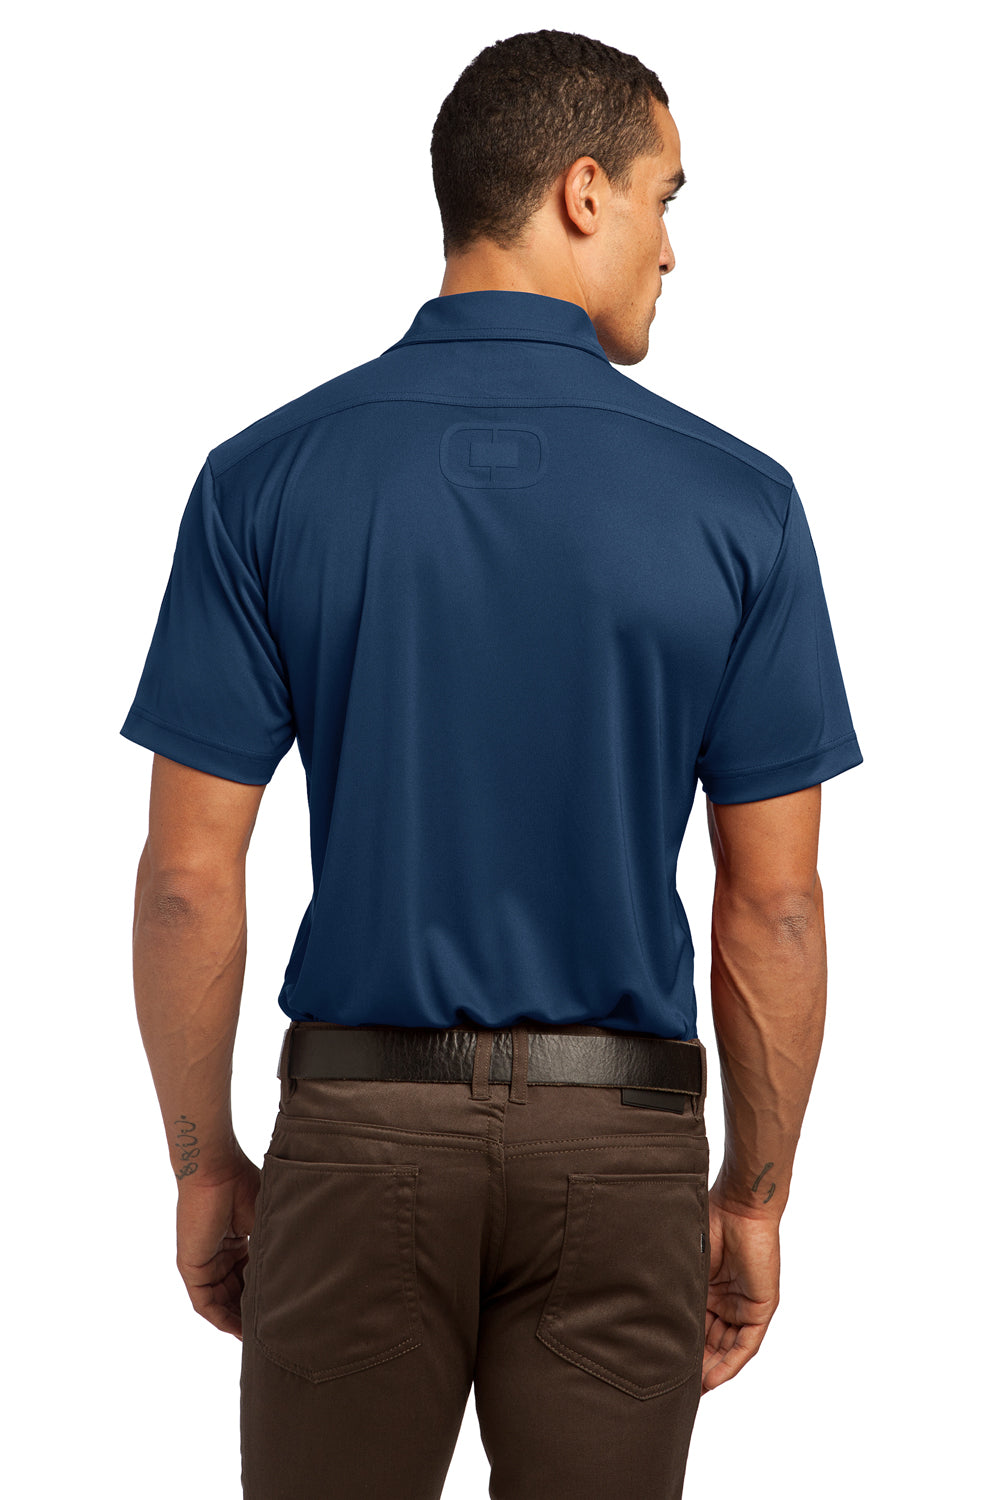 Ogio OG109 Mens Hybrid Moisture Wicking Short Sleeve Polo Shirt Indigo Blue Back